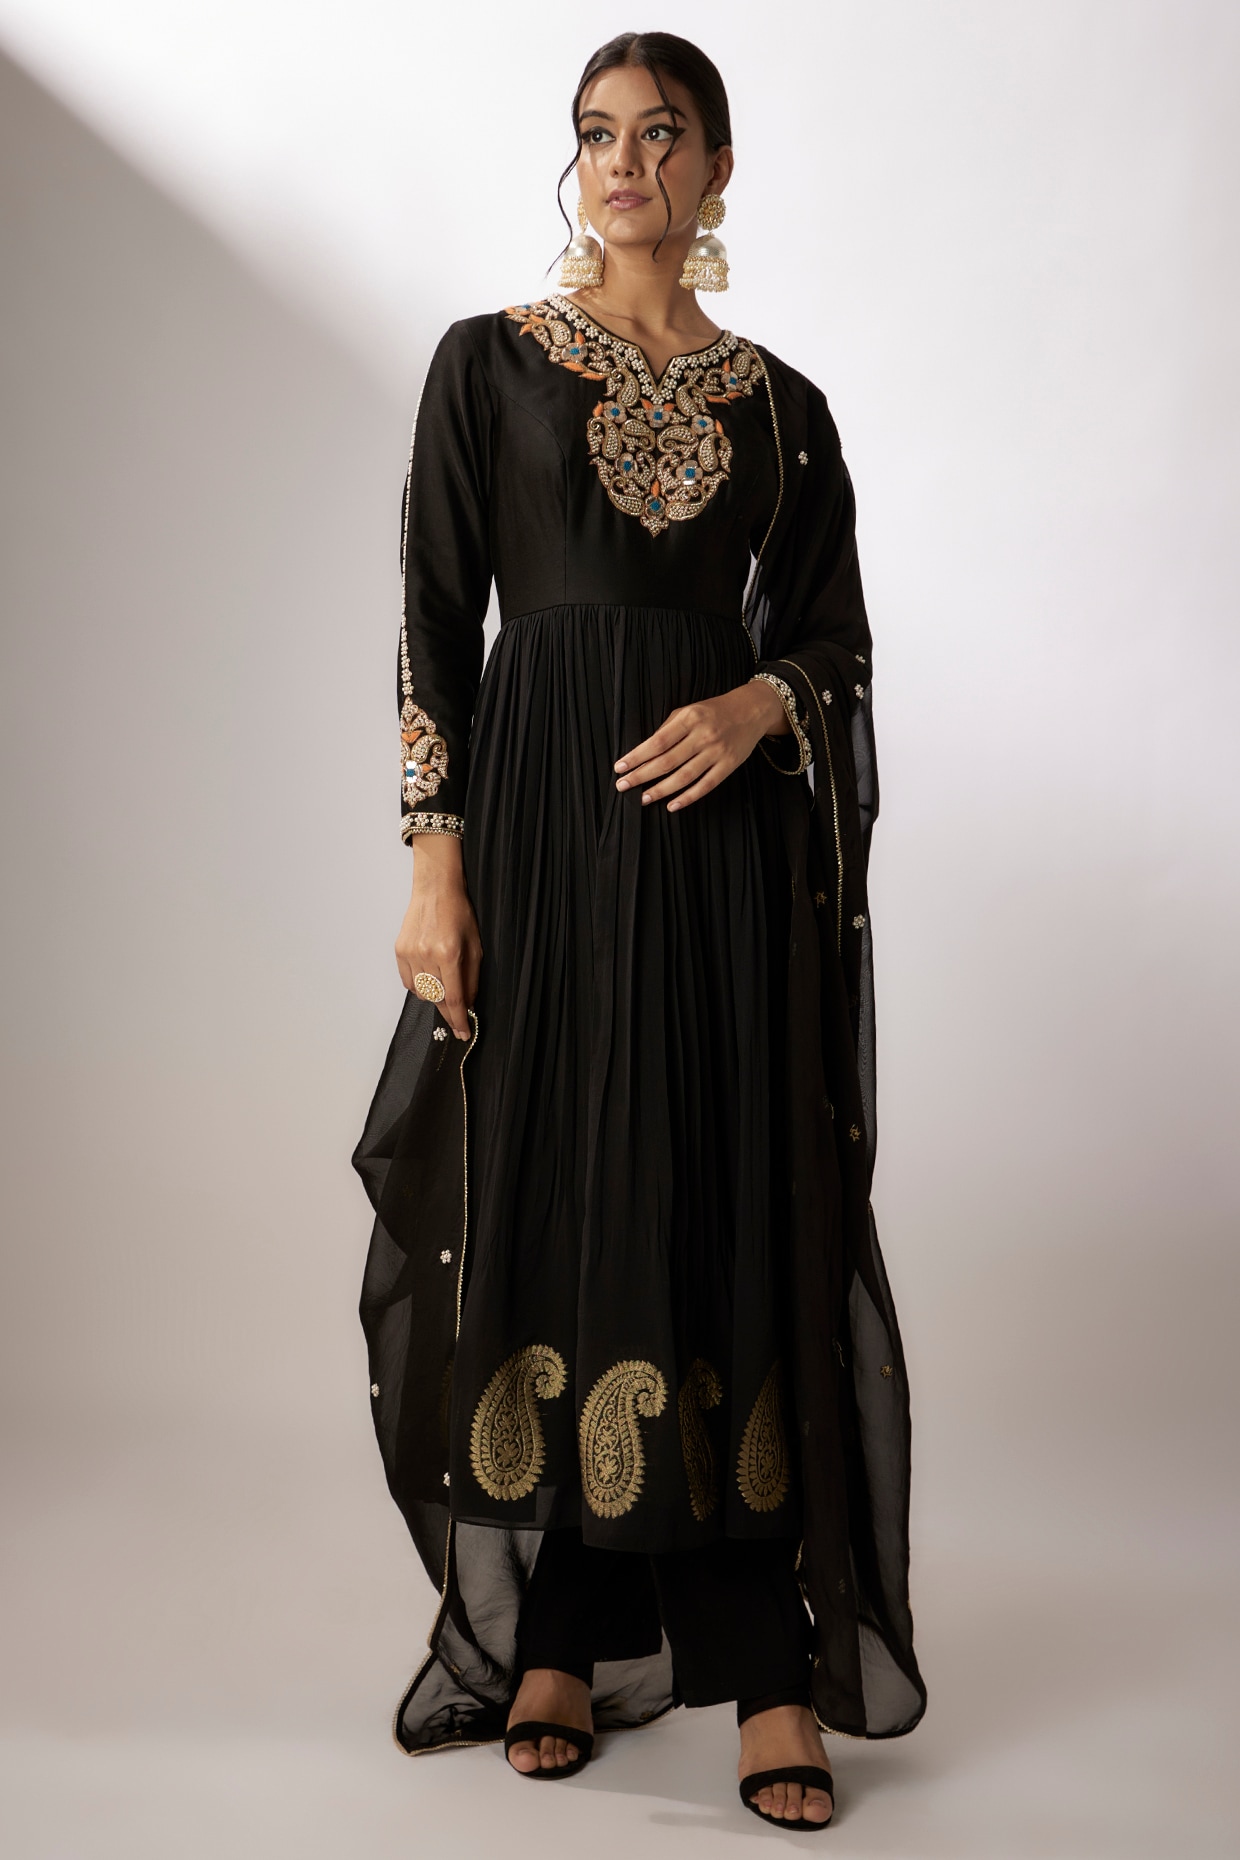 Black Brasso Churidar Suit 82819 | Evening wear dresses, Online dress  shopping, Churidar suits